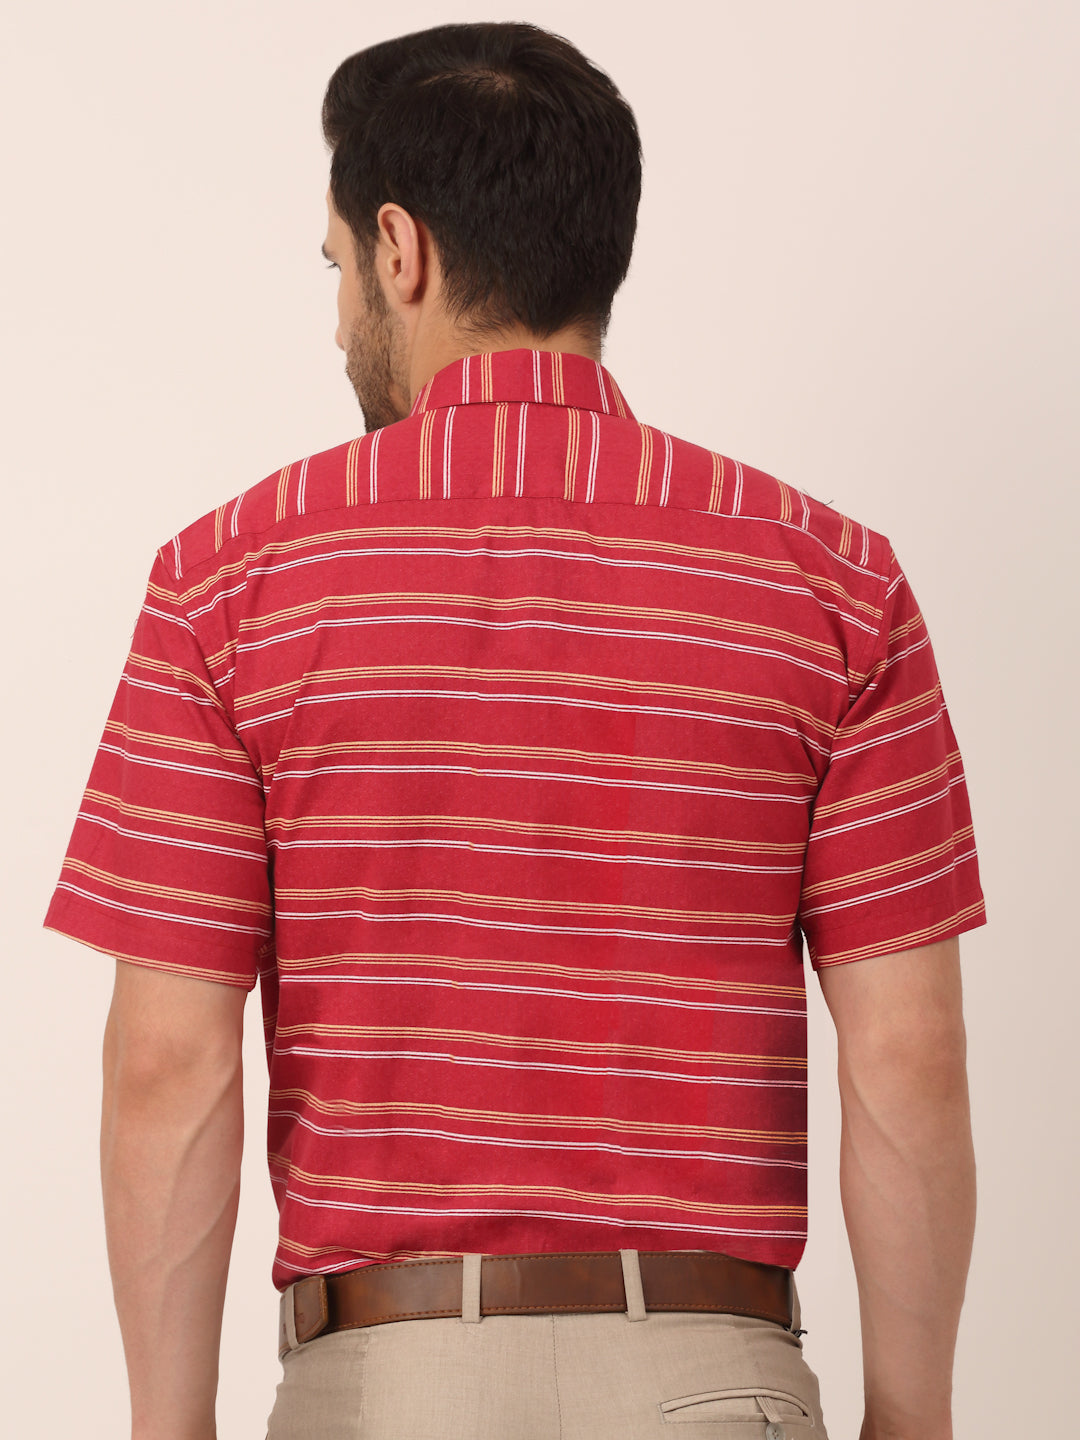 Men's Cotton Striped Half Sleeve Formal Shirts ( SF 816Maroon ) - Jainish